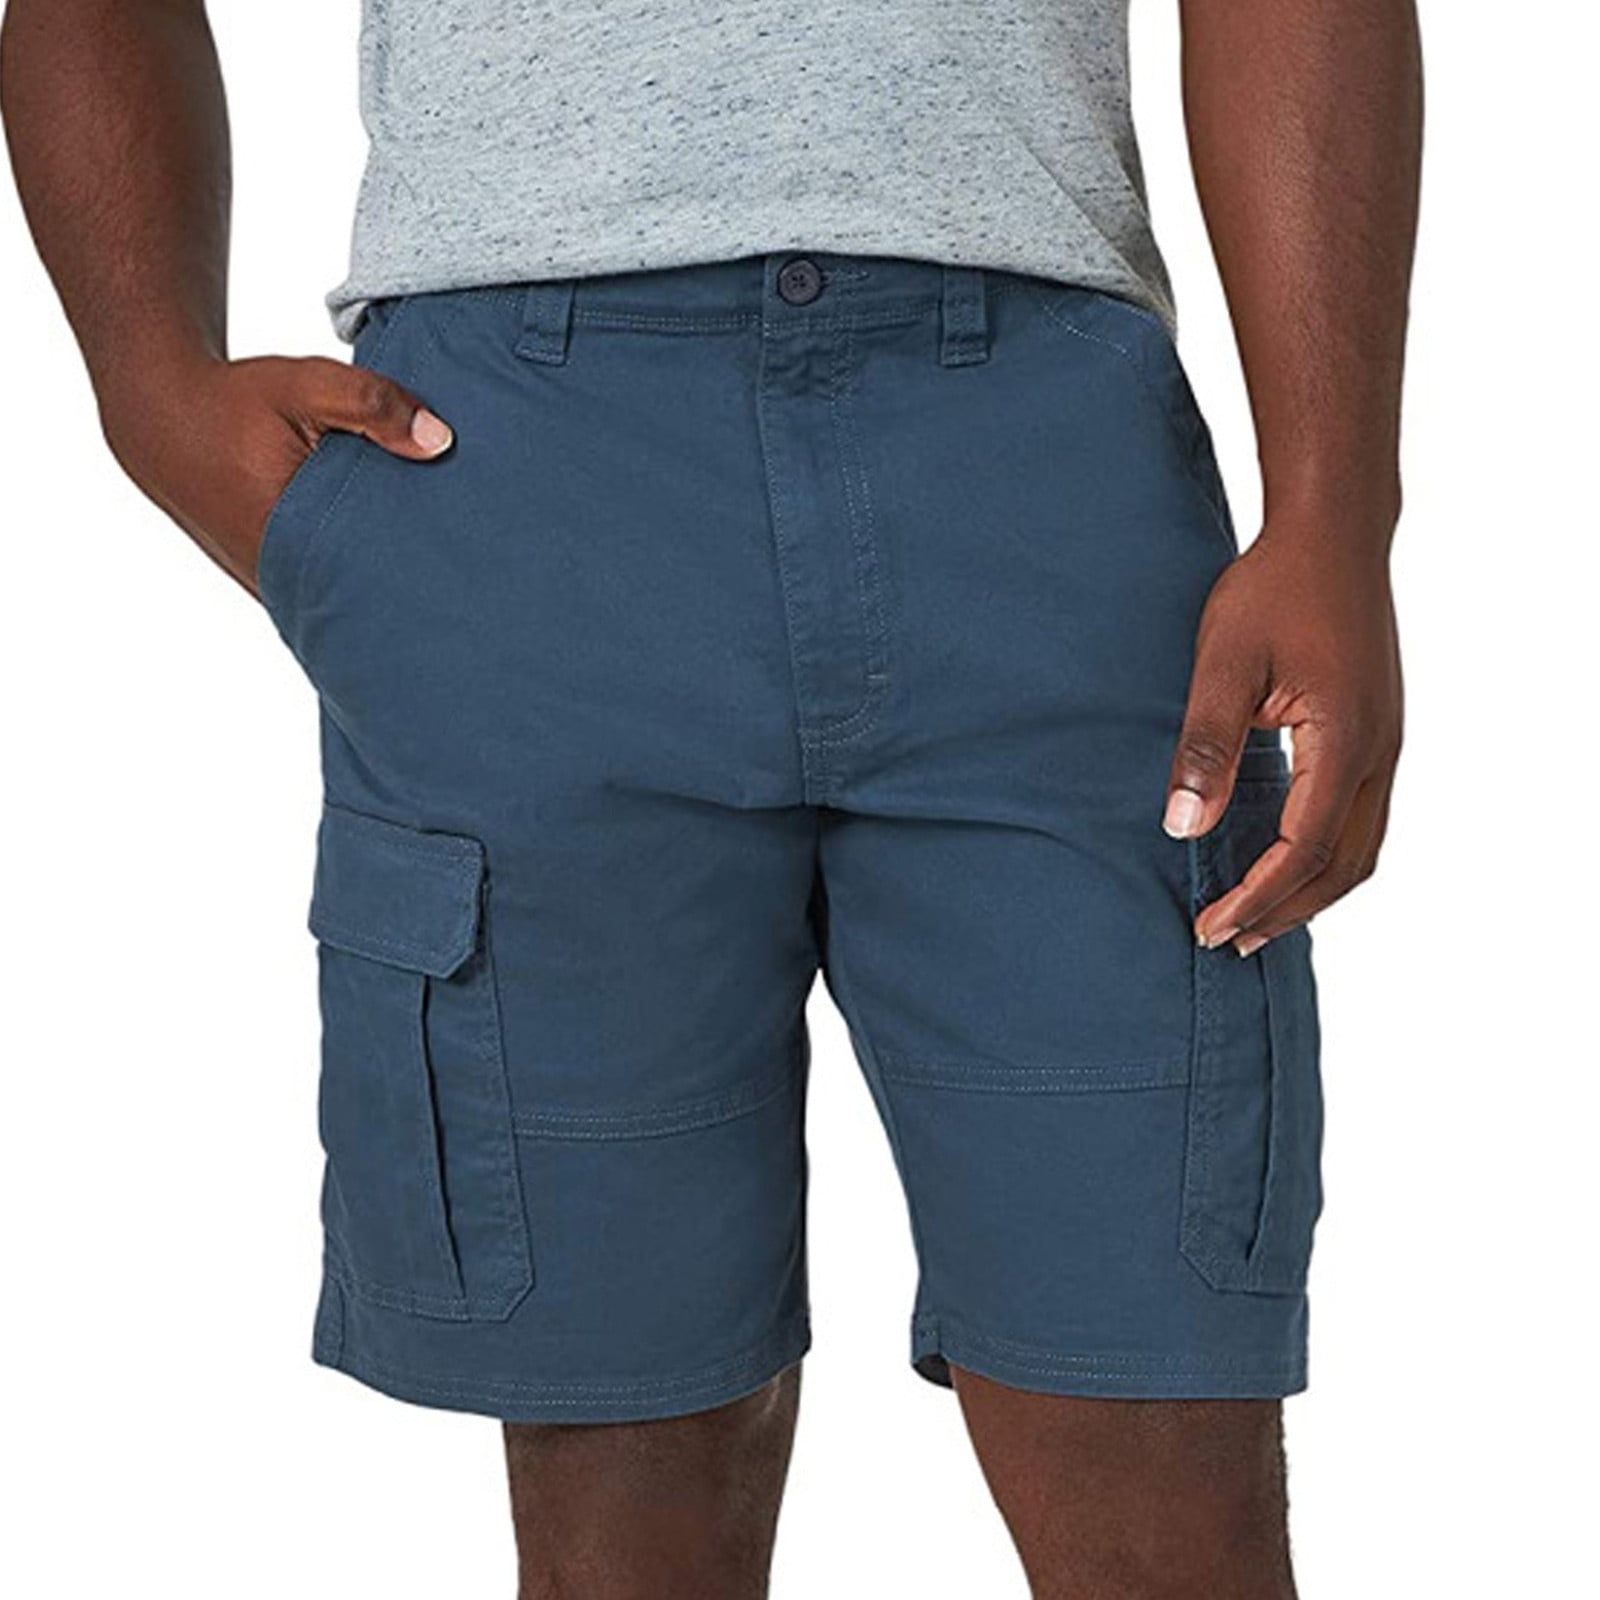 Mychoice - Mchoice Fashion Comfy Men's Shorts Leisure Time Cargo Shorts ...